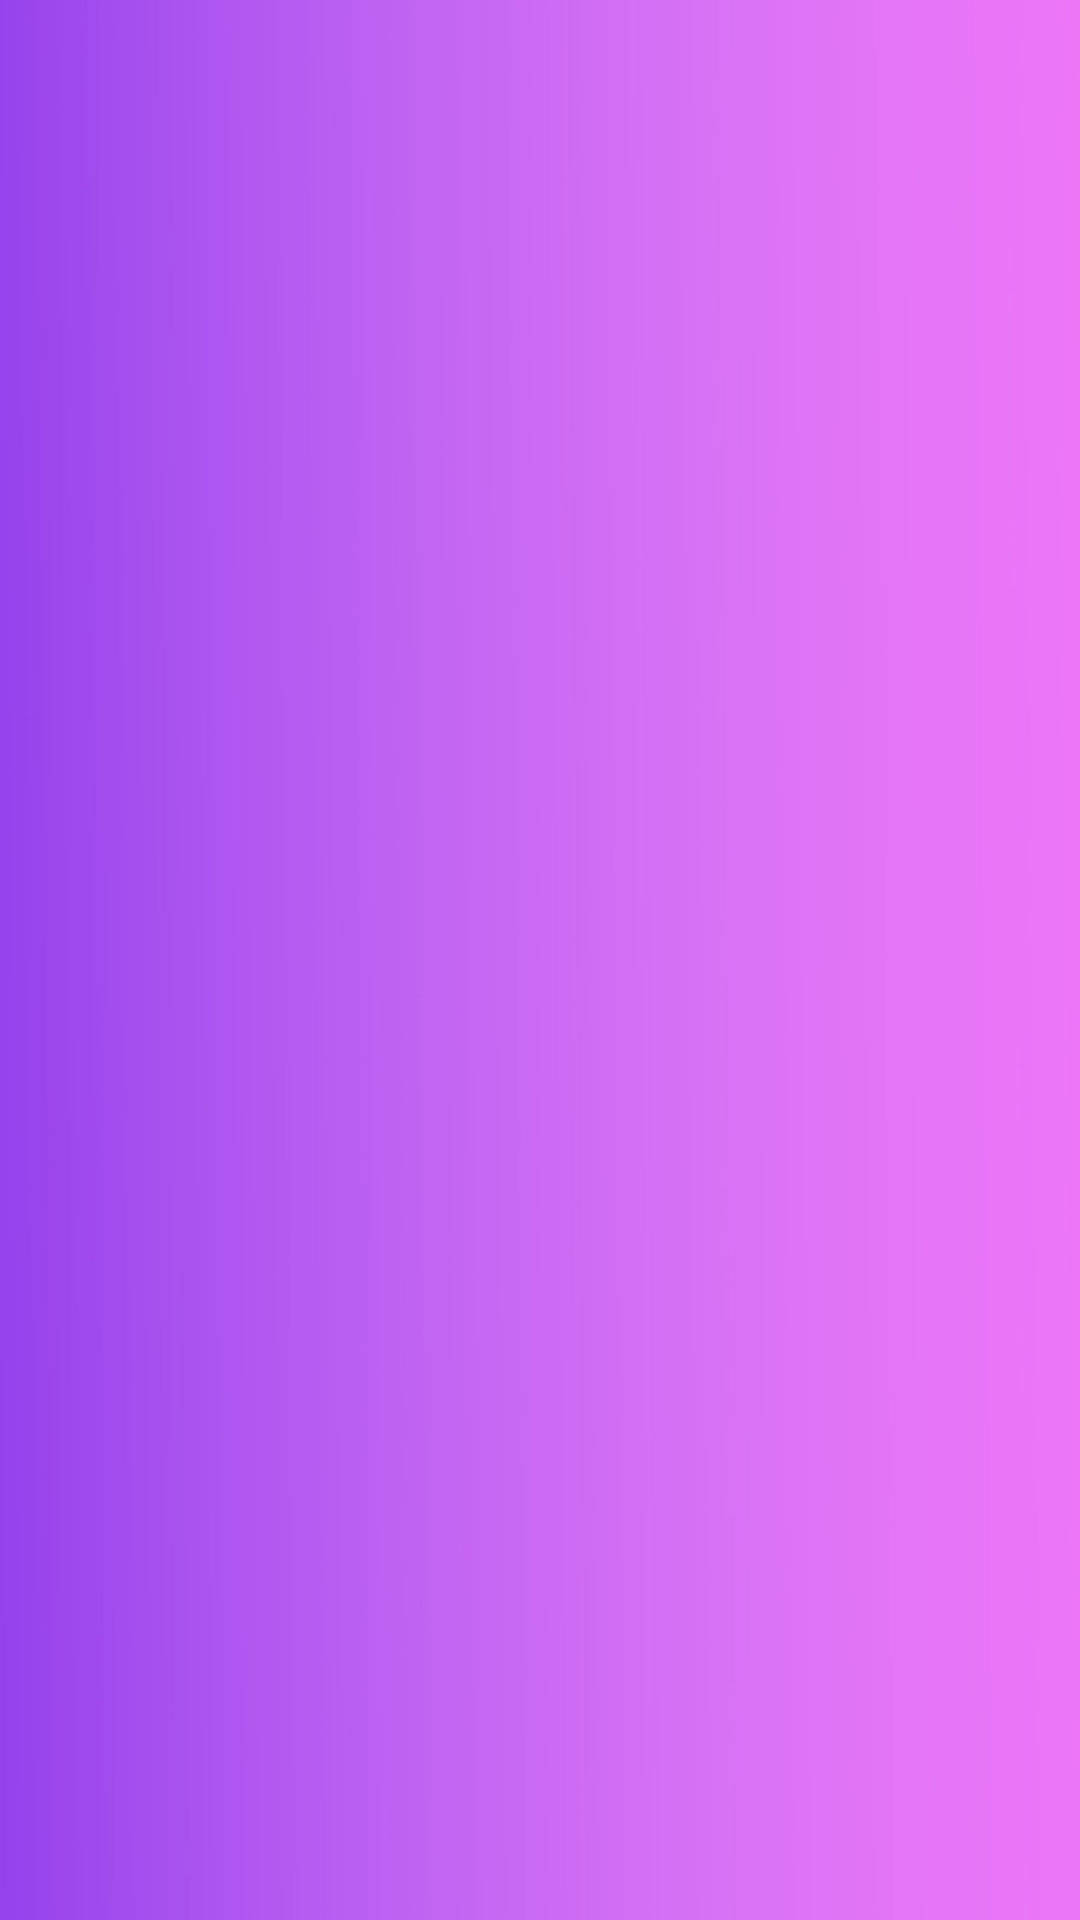 Plain Hd Iphone Violet Shades Wallpaper